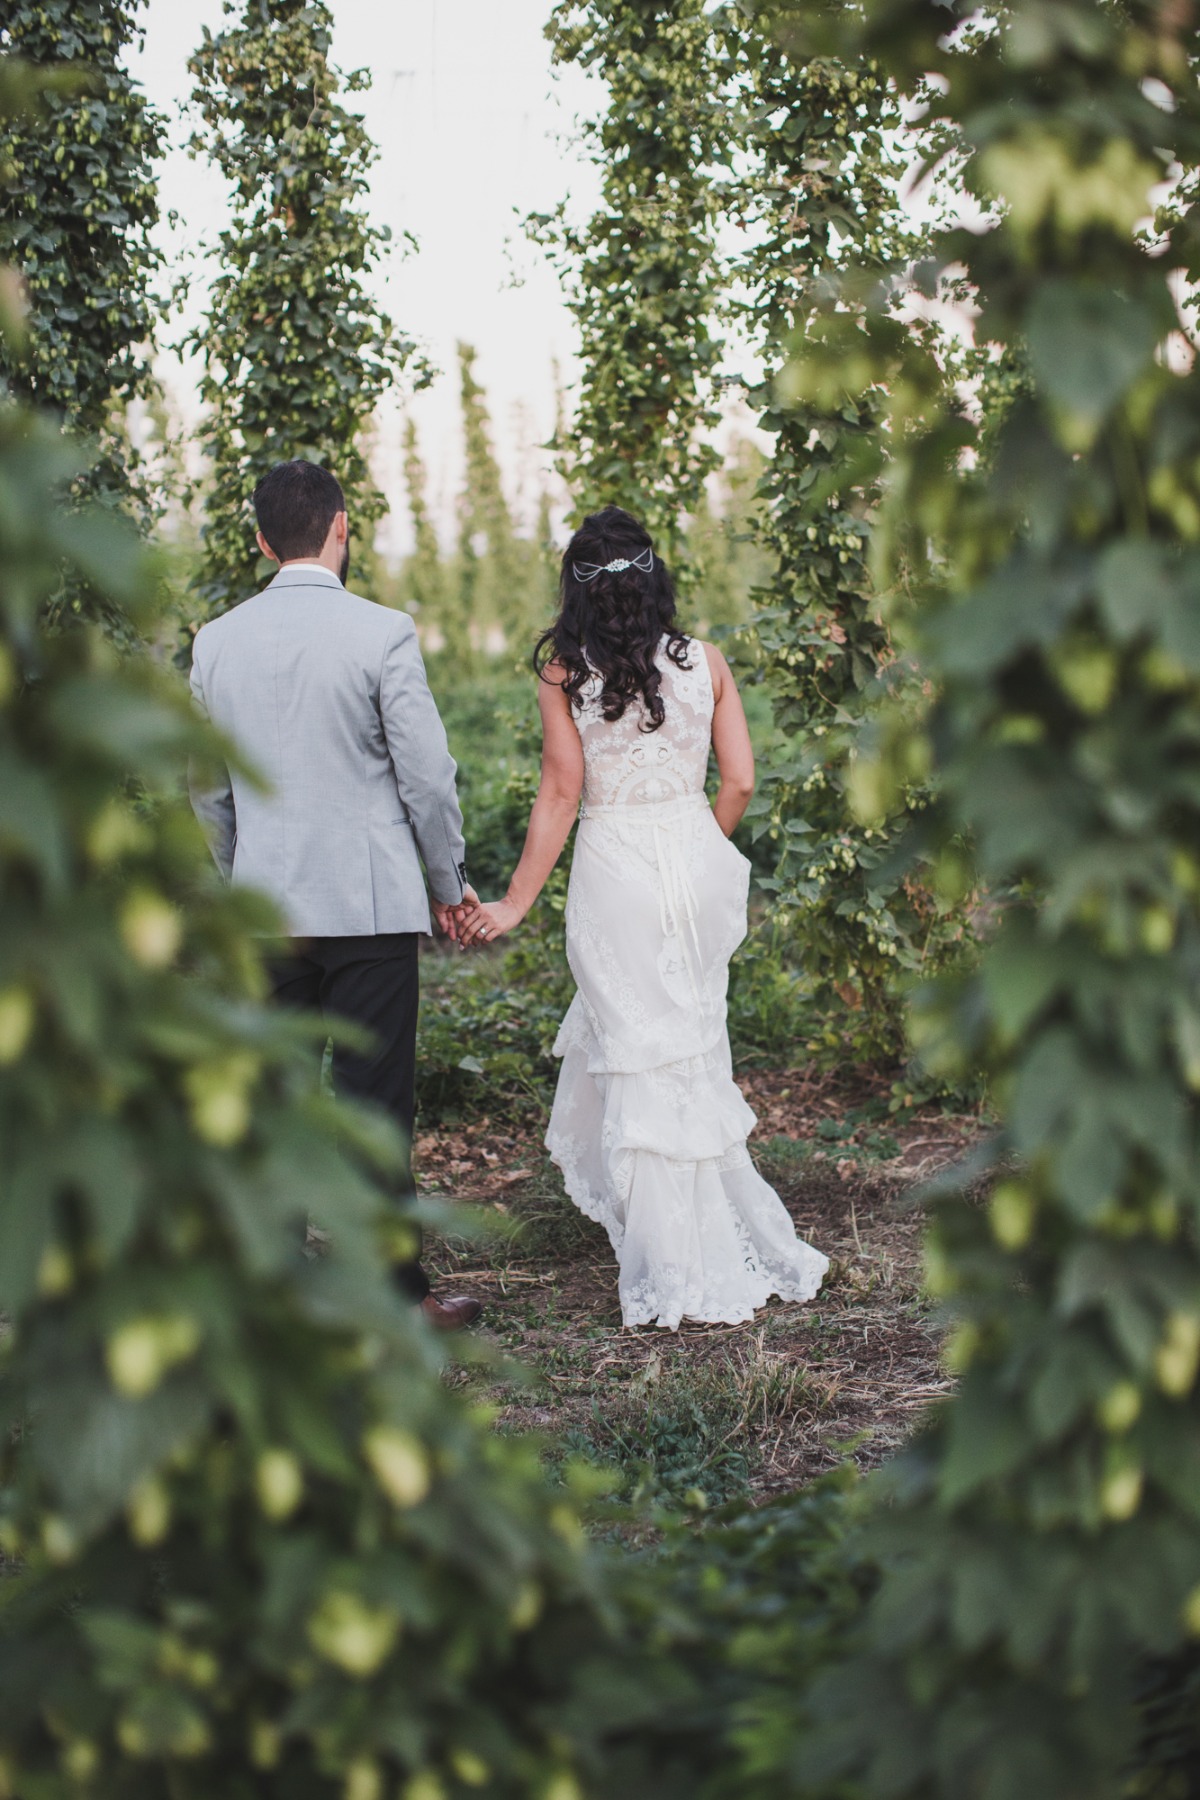 a wedding walk through the hops